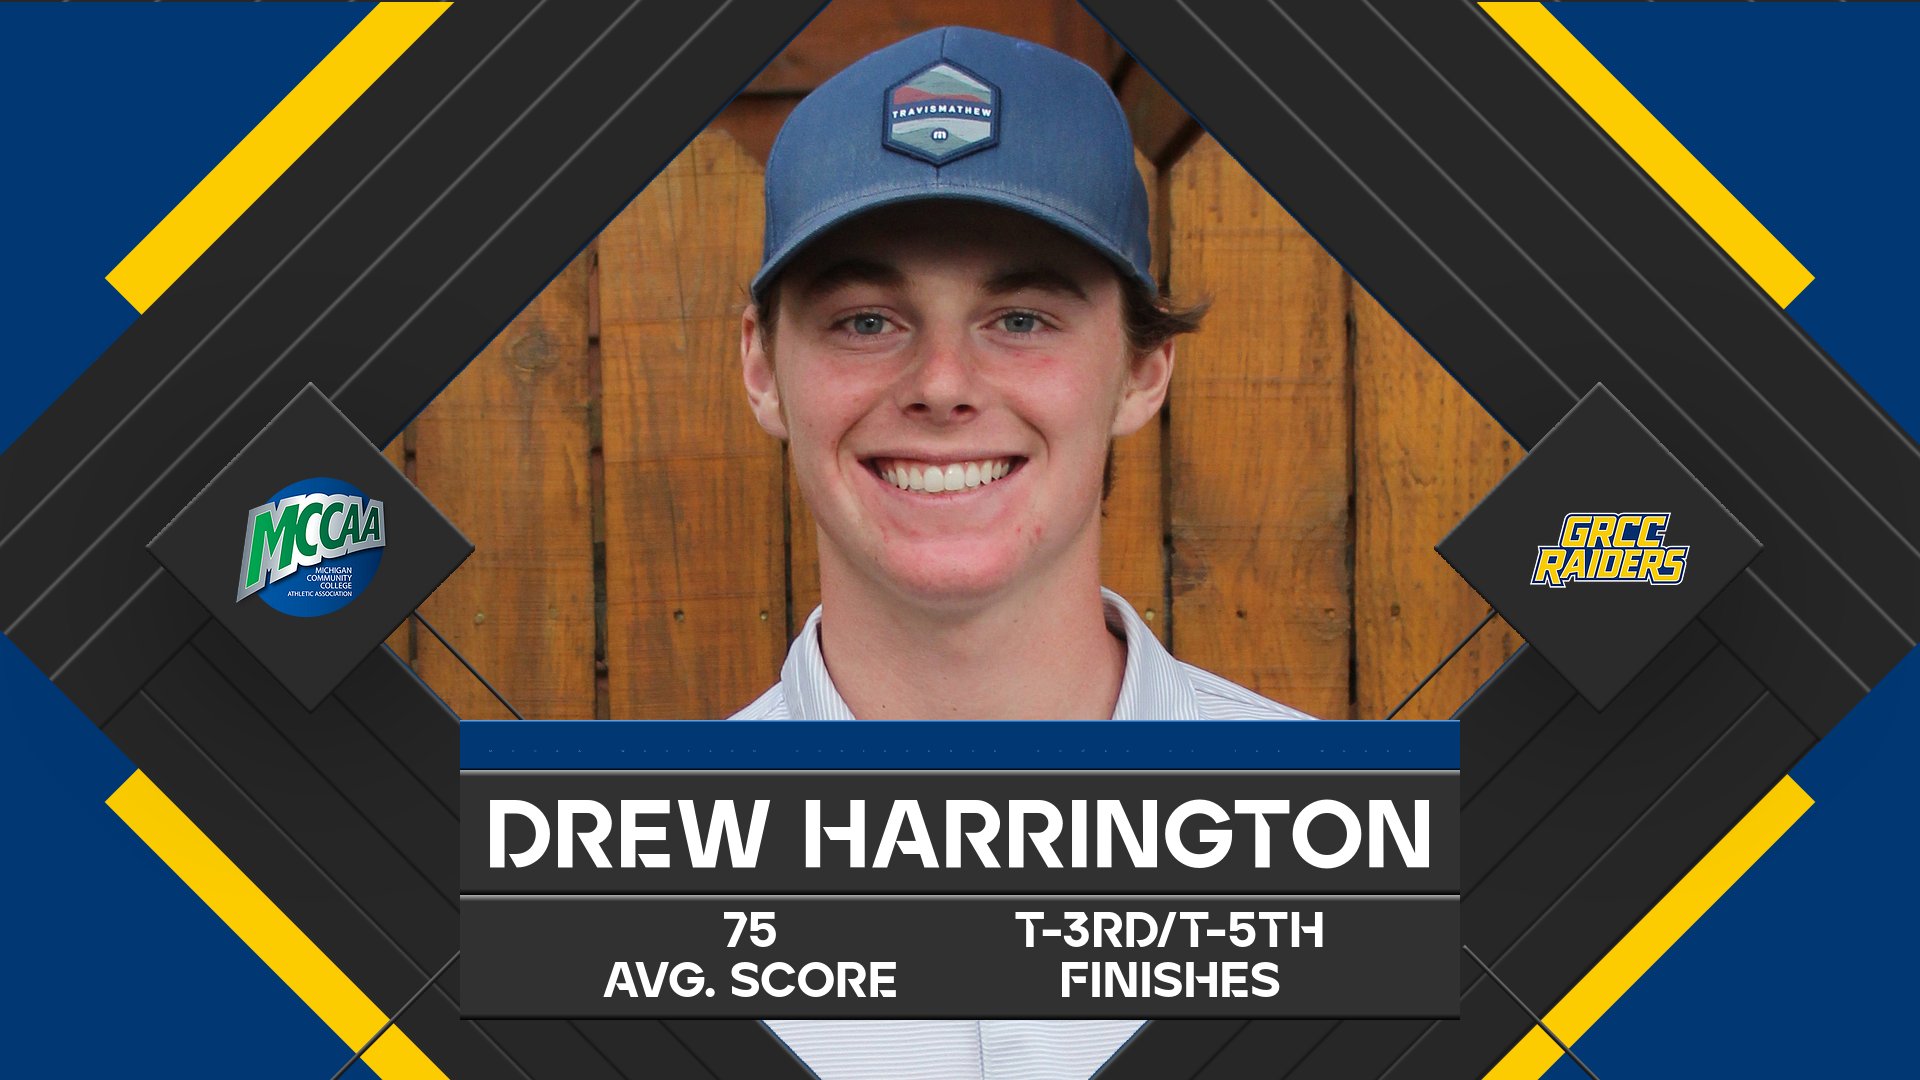 GRCC's Drew Harrington Earns MCCAA Western Conference Golfer of the Week Honors